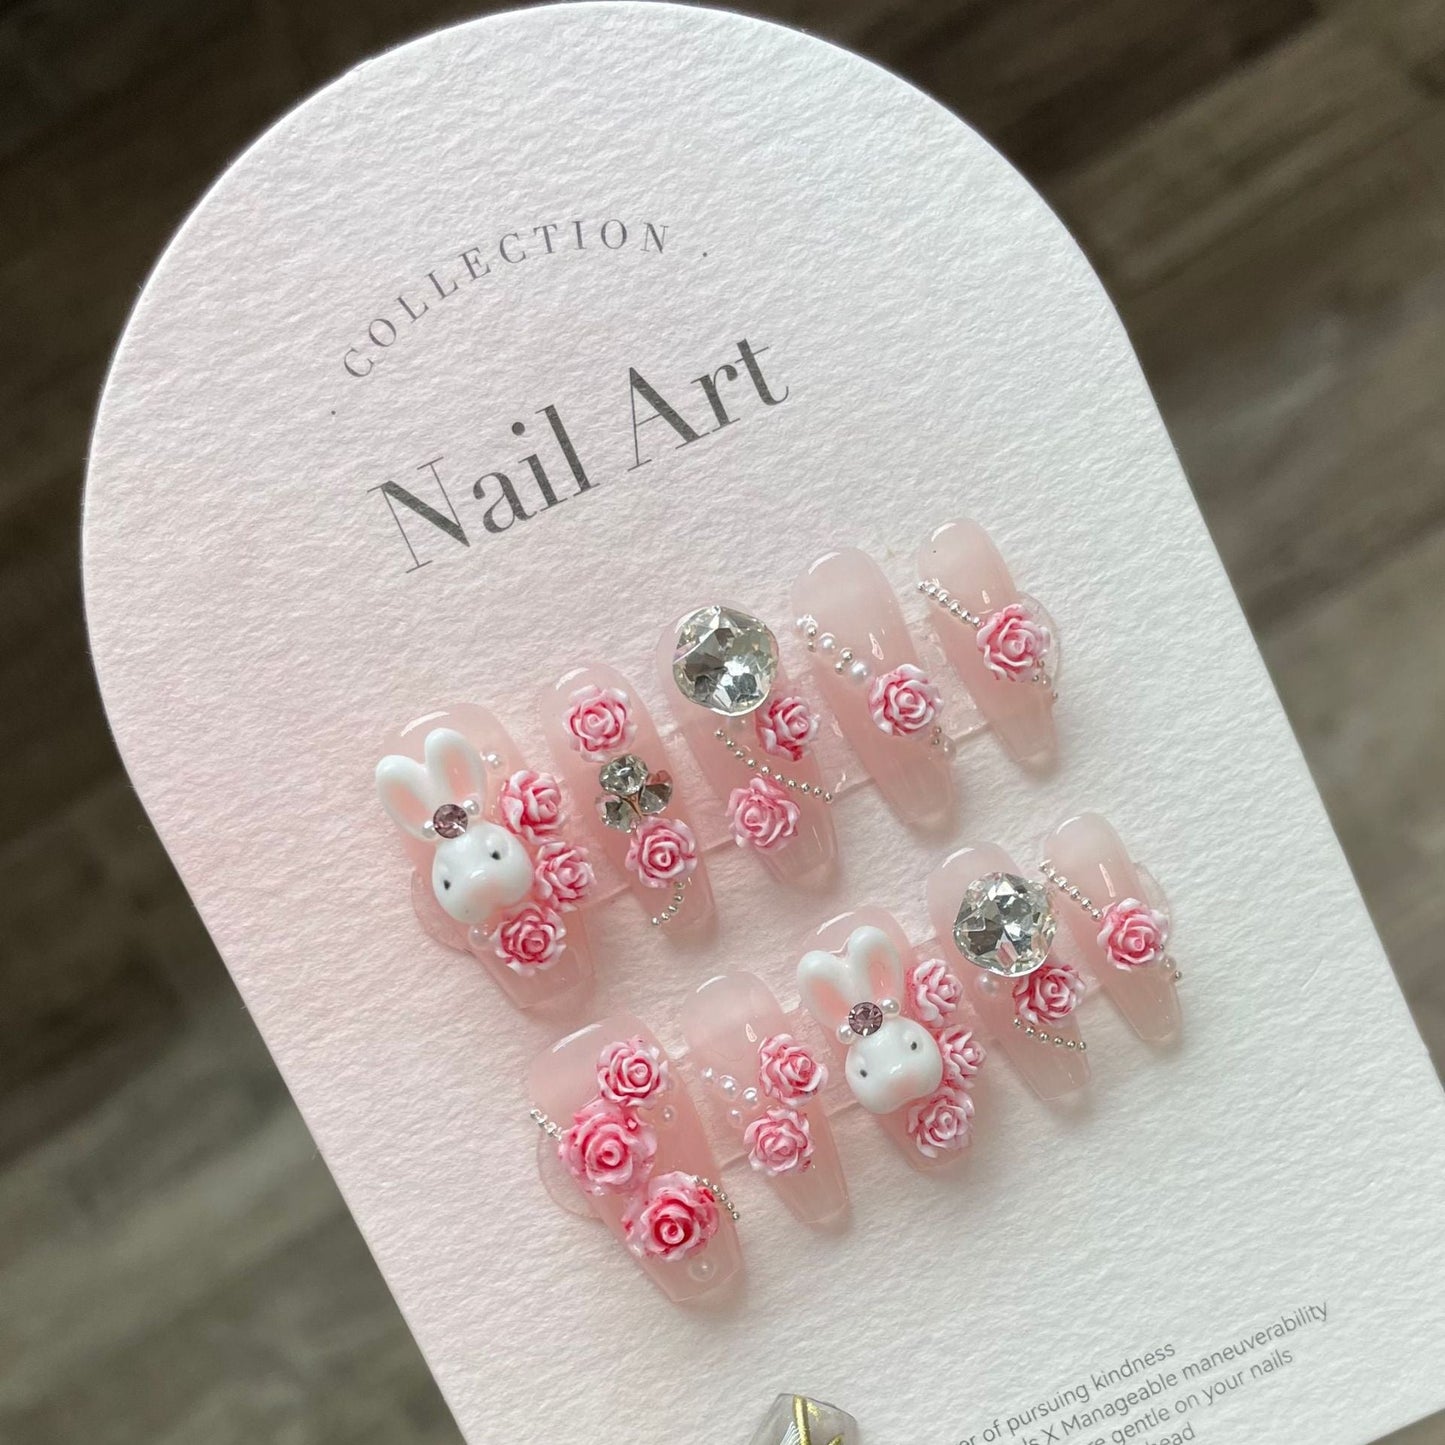 855 Rabbit Flower style press on nails 100% handmade false nails pink